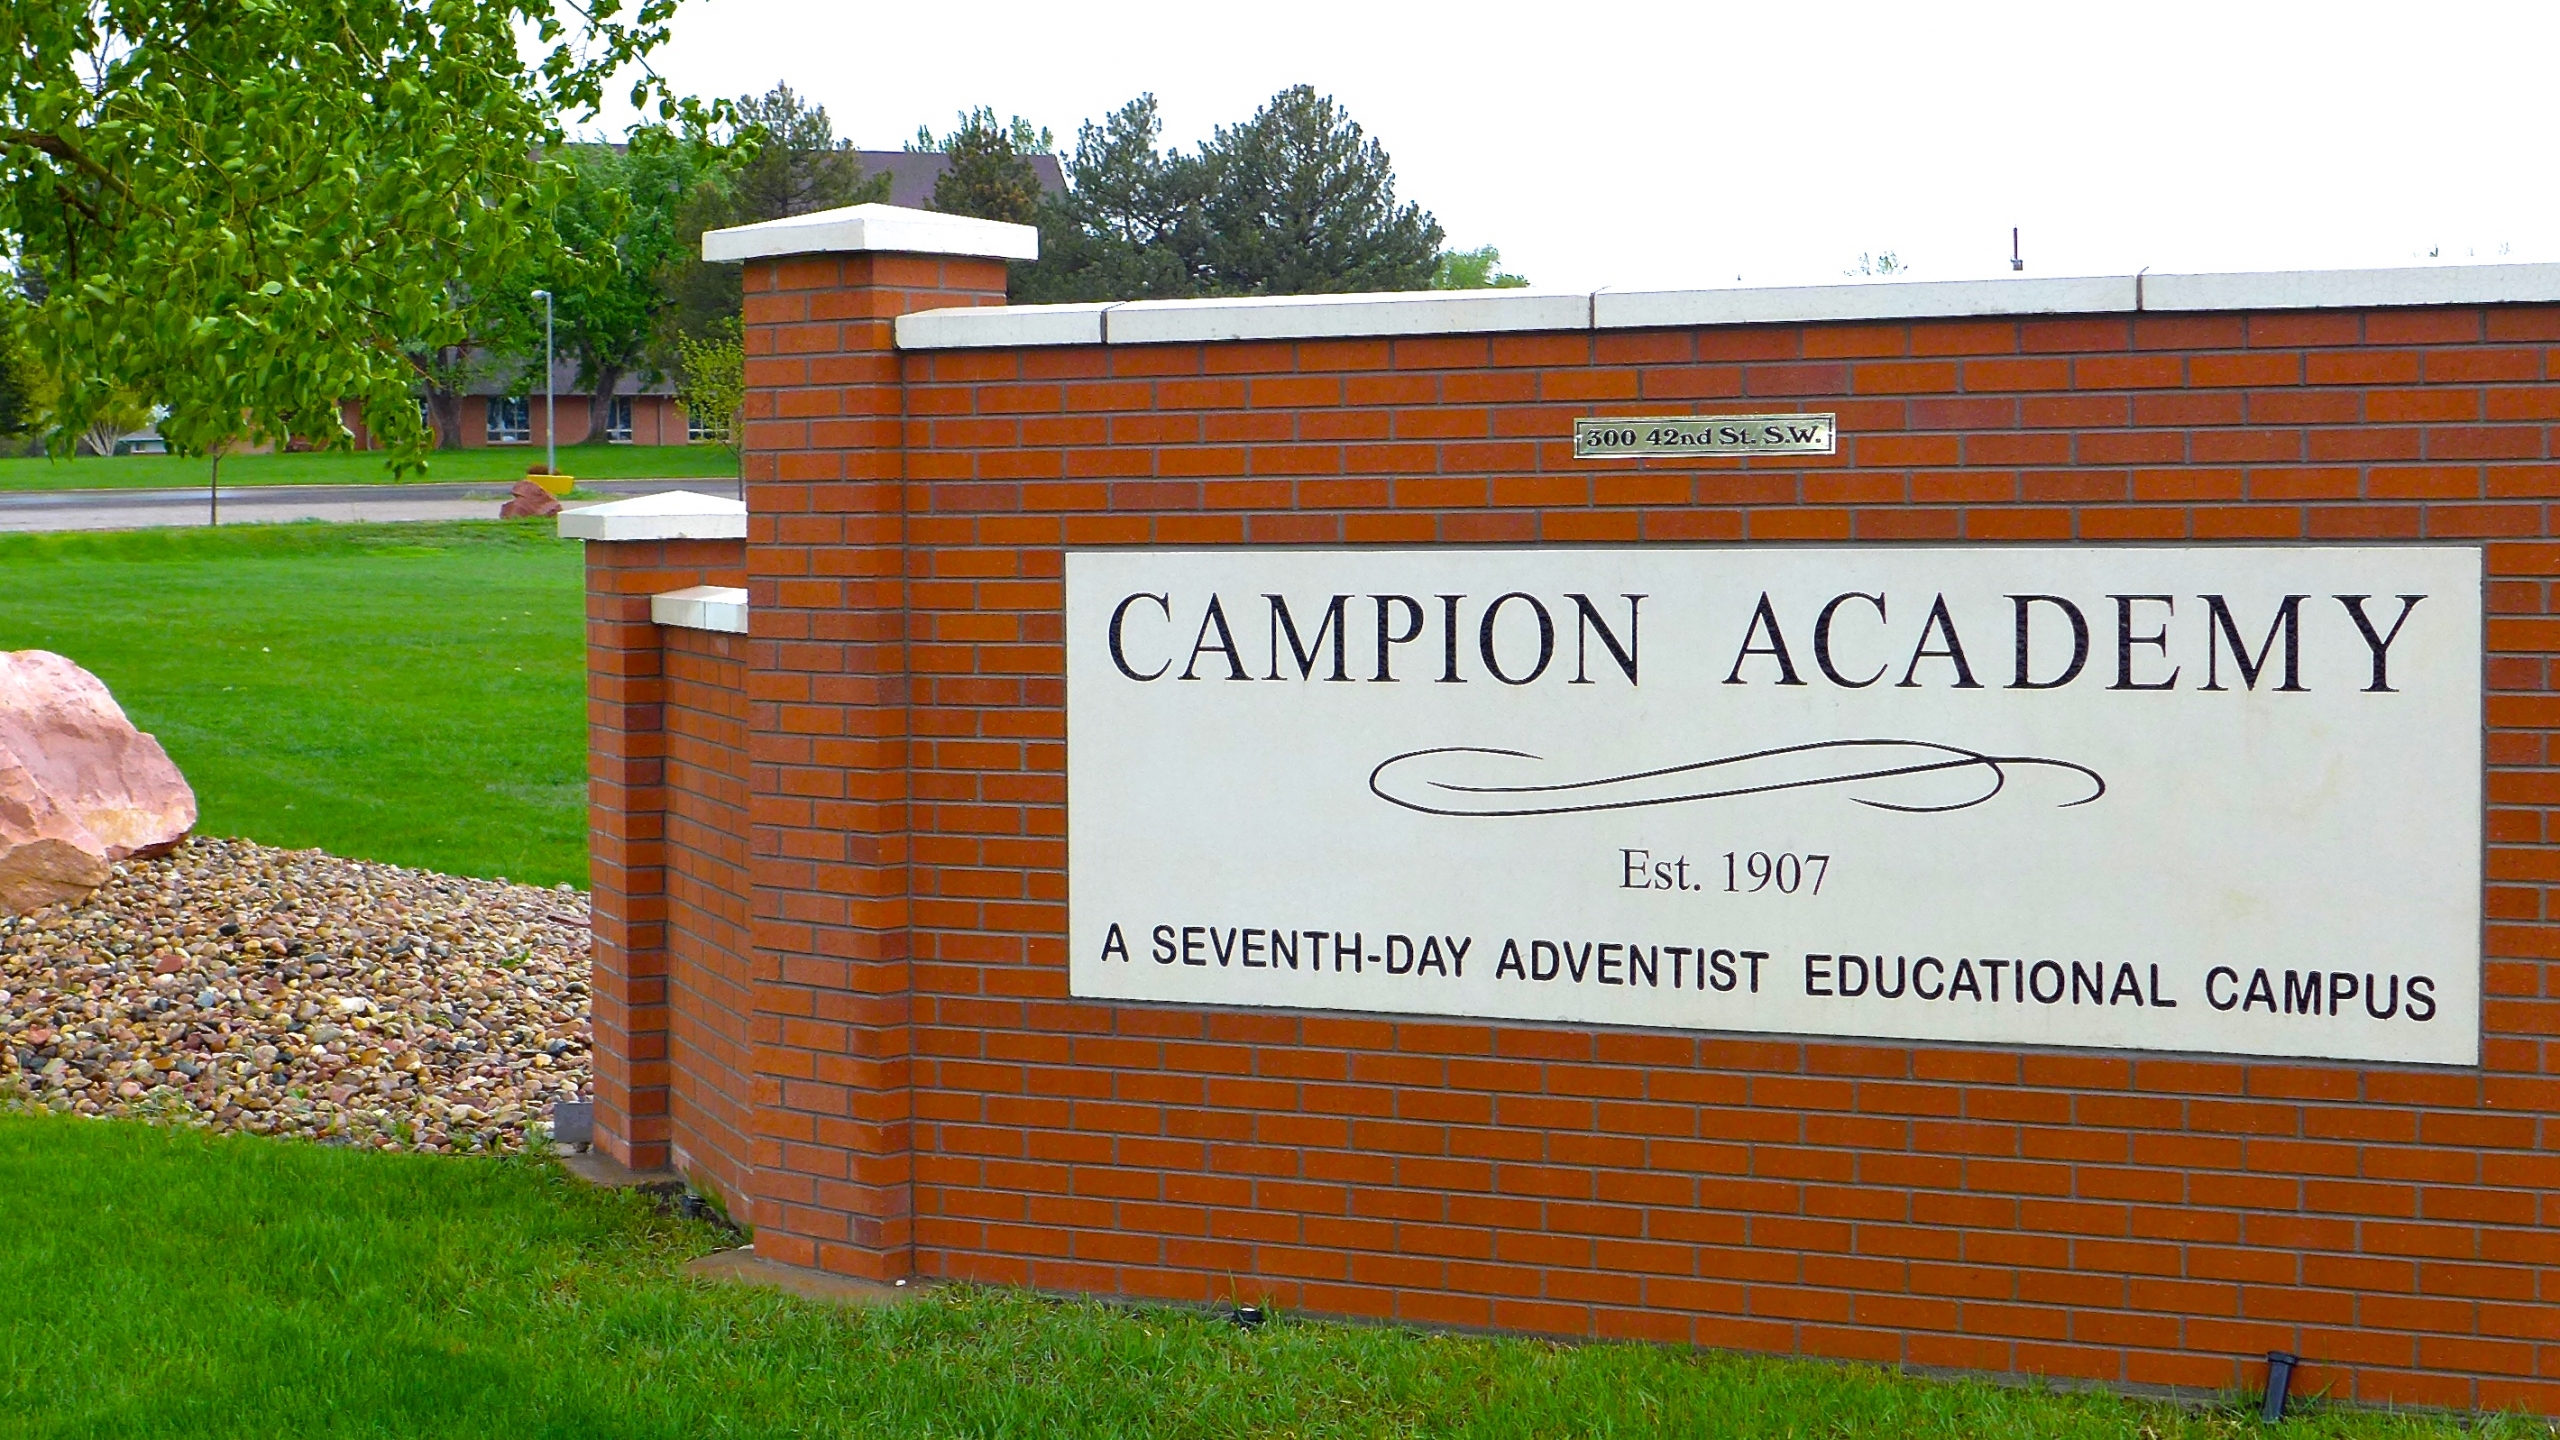 Campion Academy responds to COVID-19